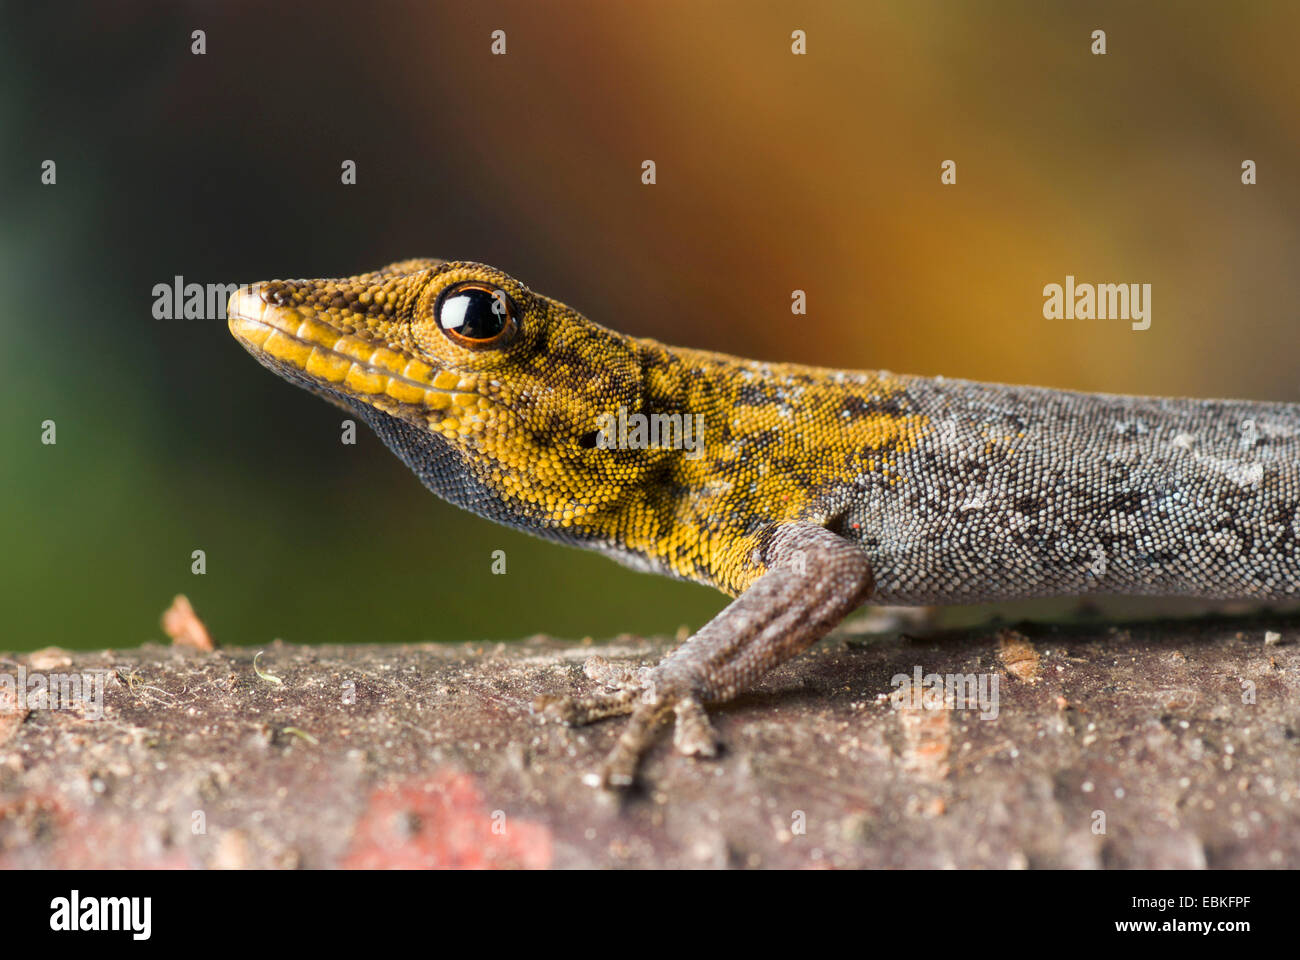 Geco enano común, Cabo enano (gecos Lygodactylus capensis), Retrato Foto de stock